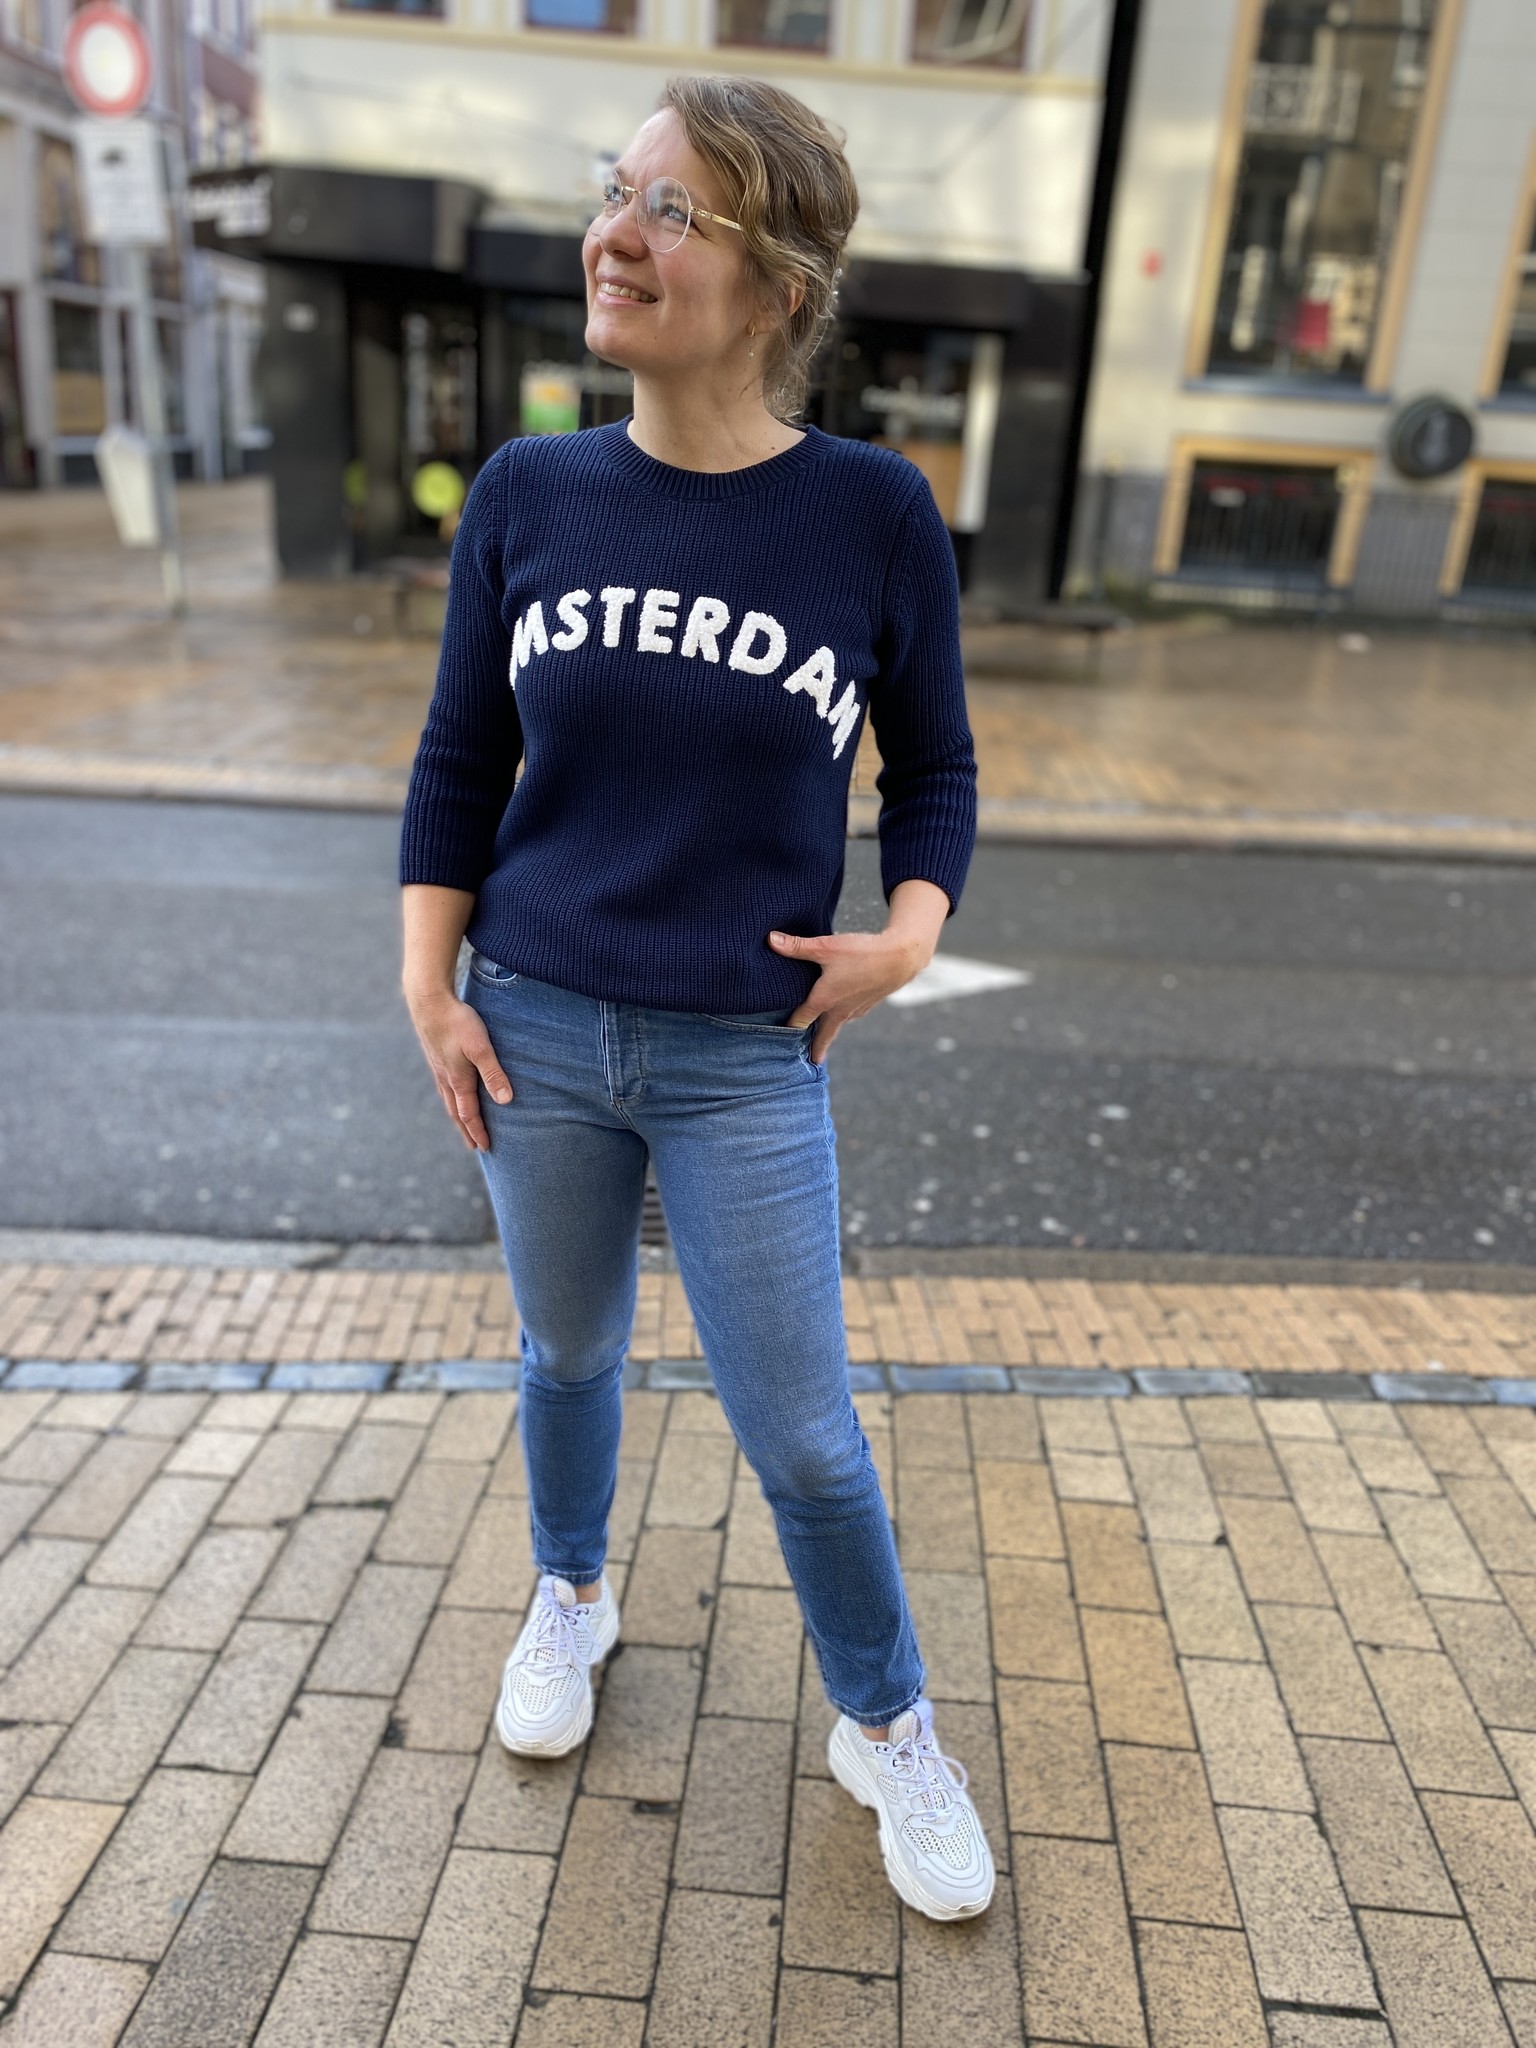 Disco Hardheid professioneel 10days S212 sweater amsterdam blue - BIEN